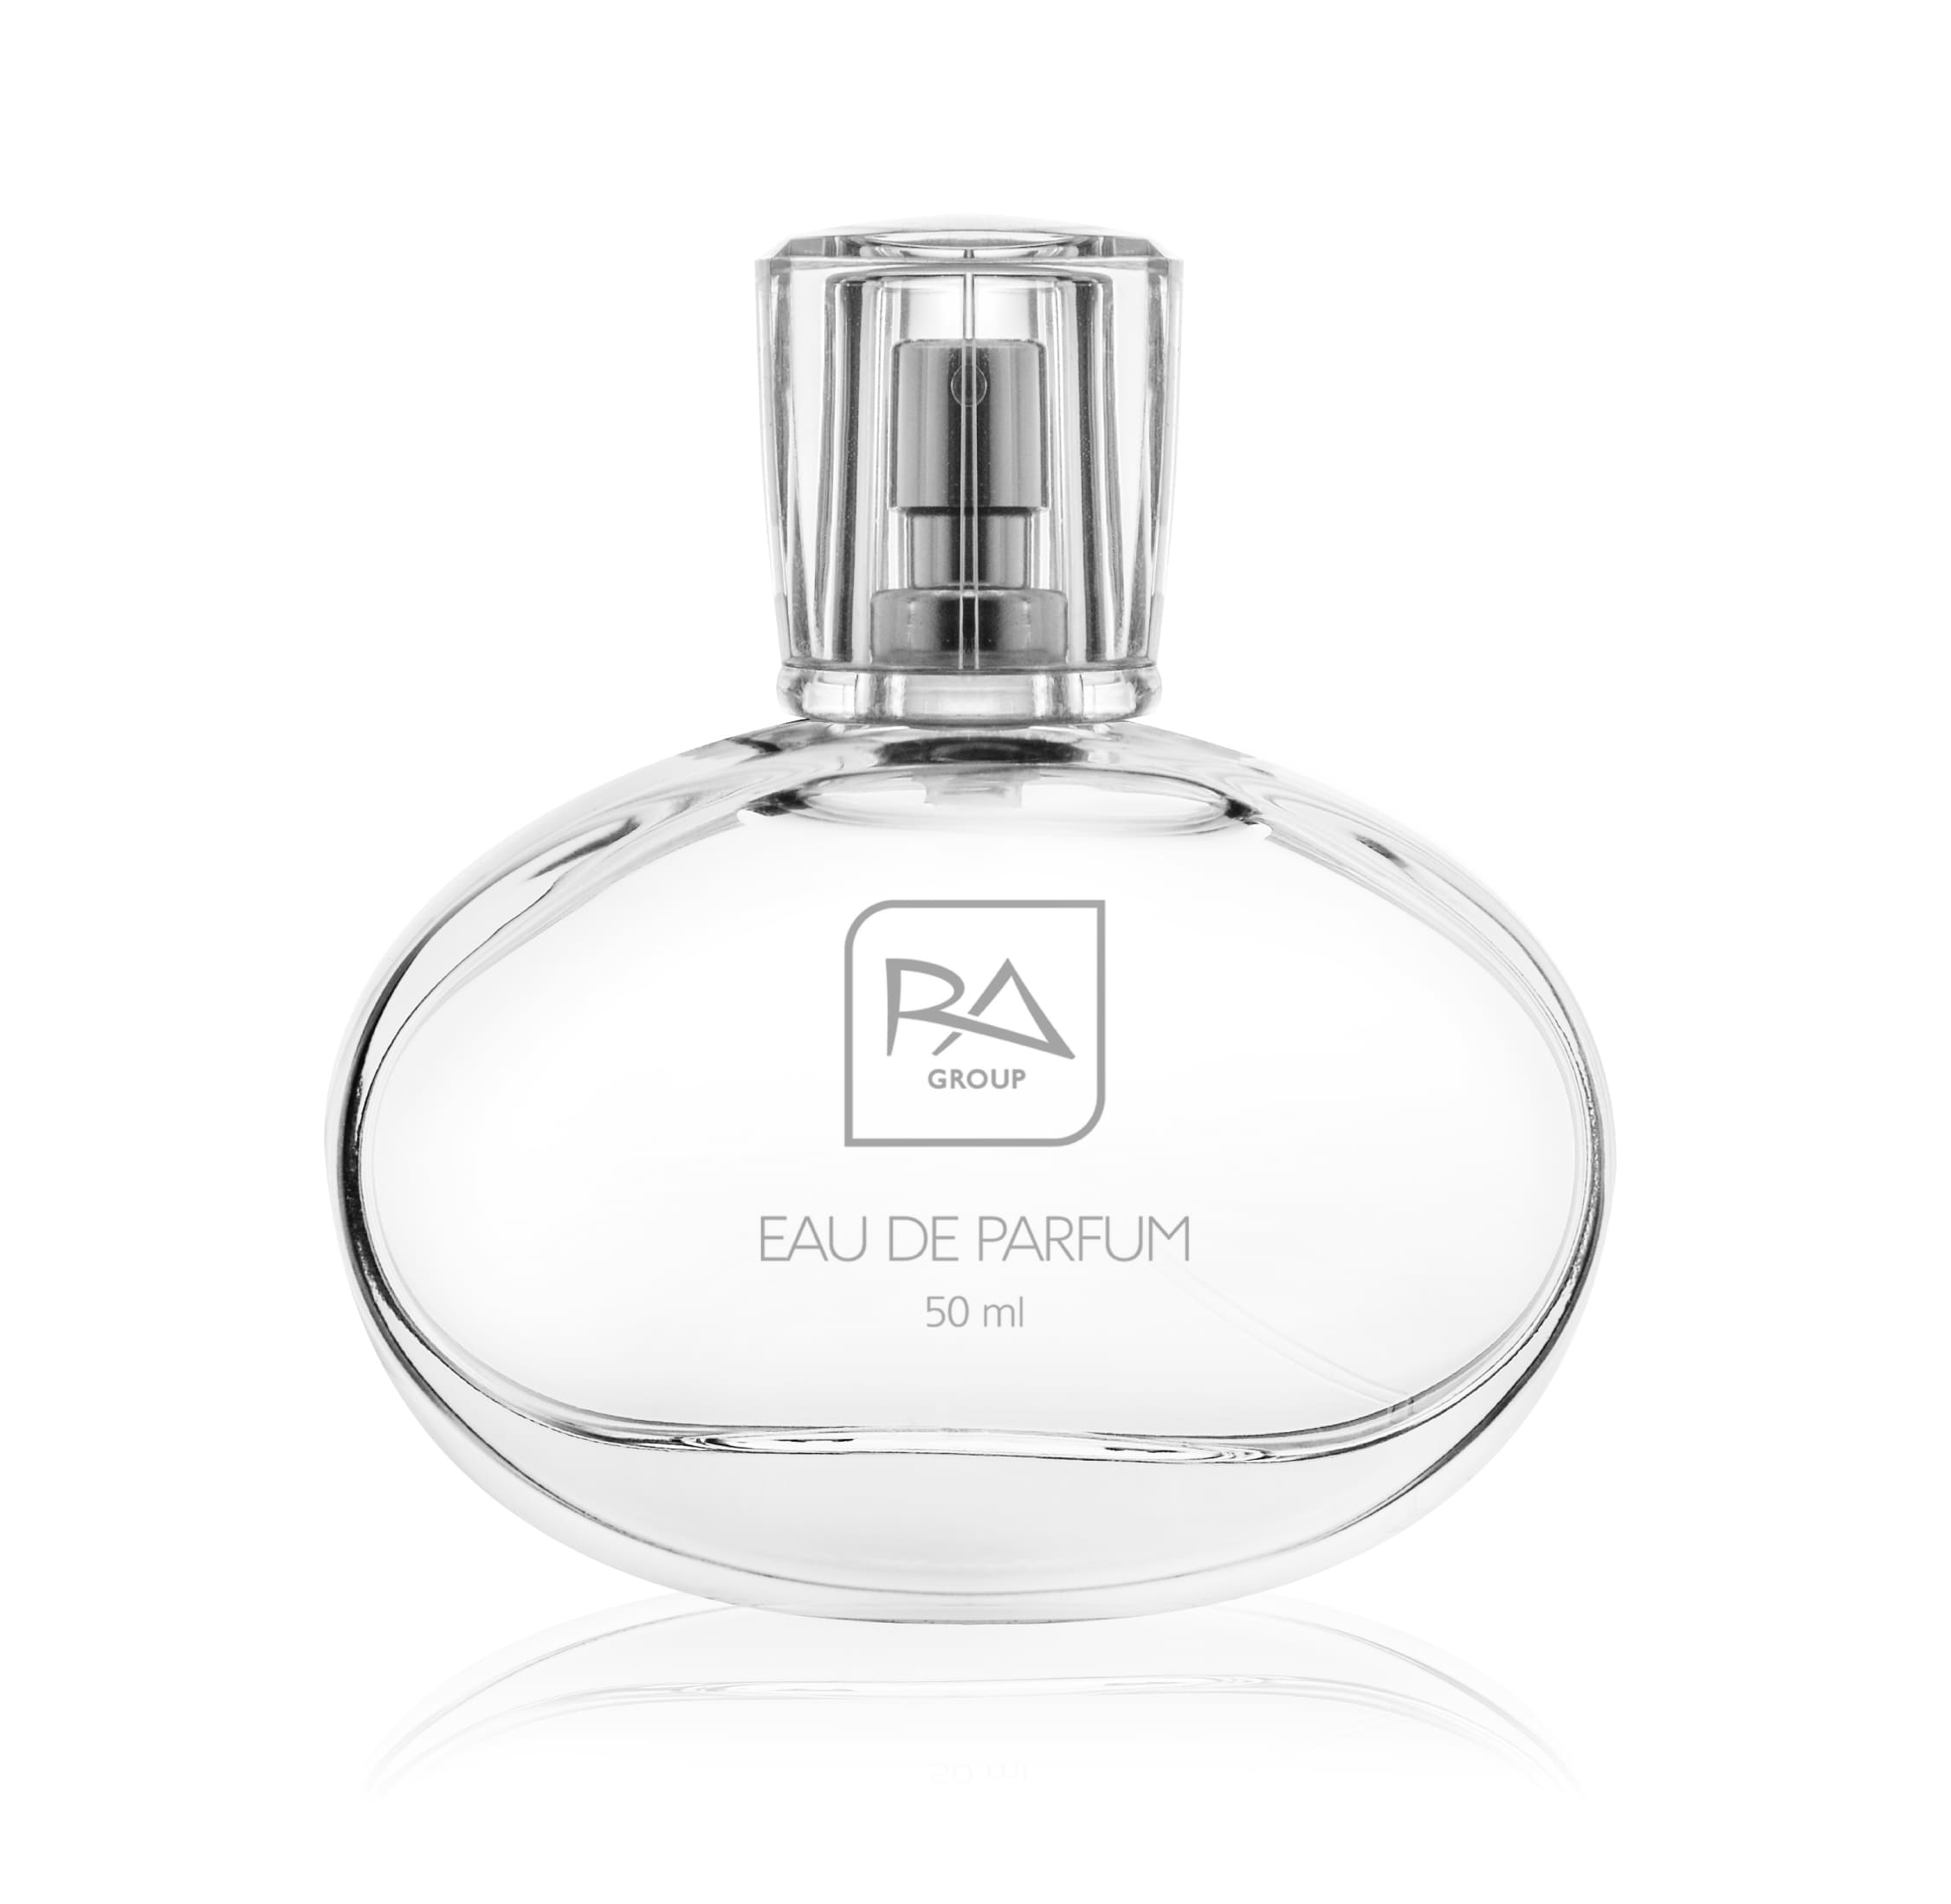 Eau de parfum RA141